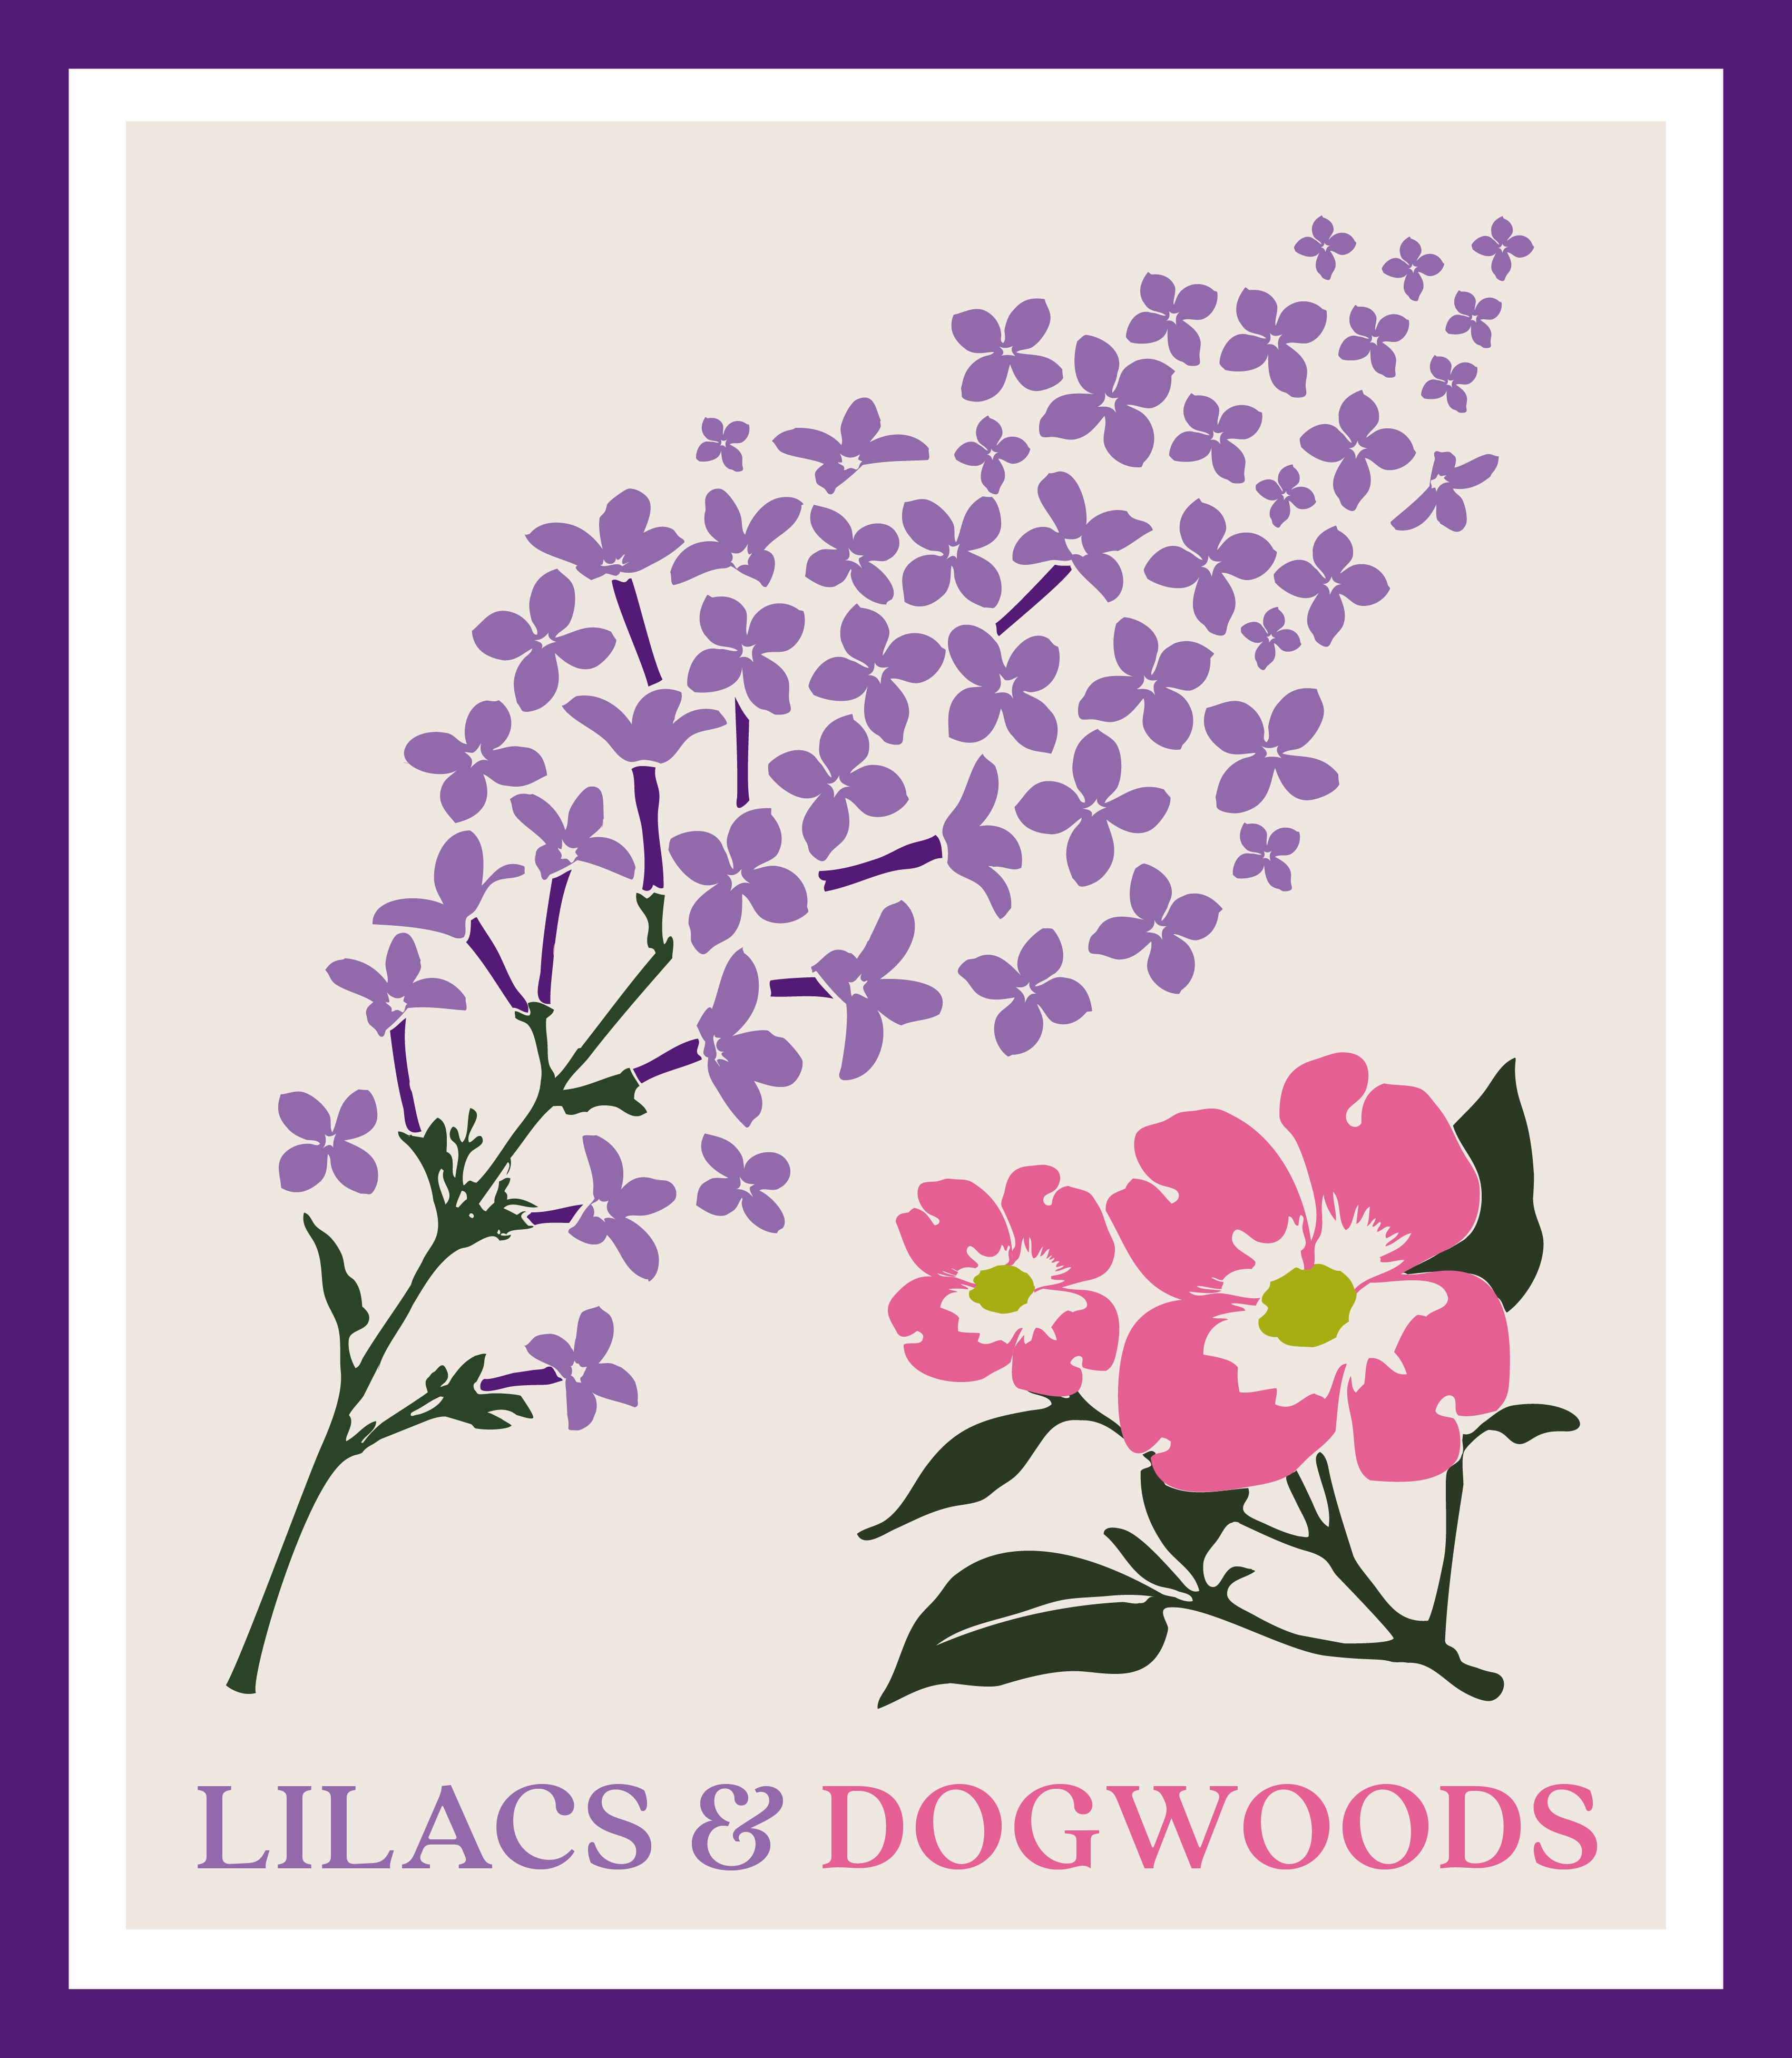 Lilacs & Dogwoods campaign logo